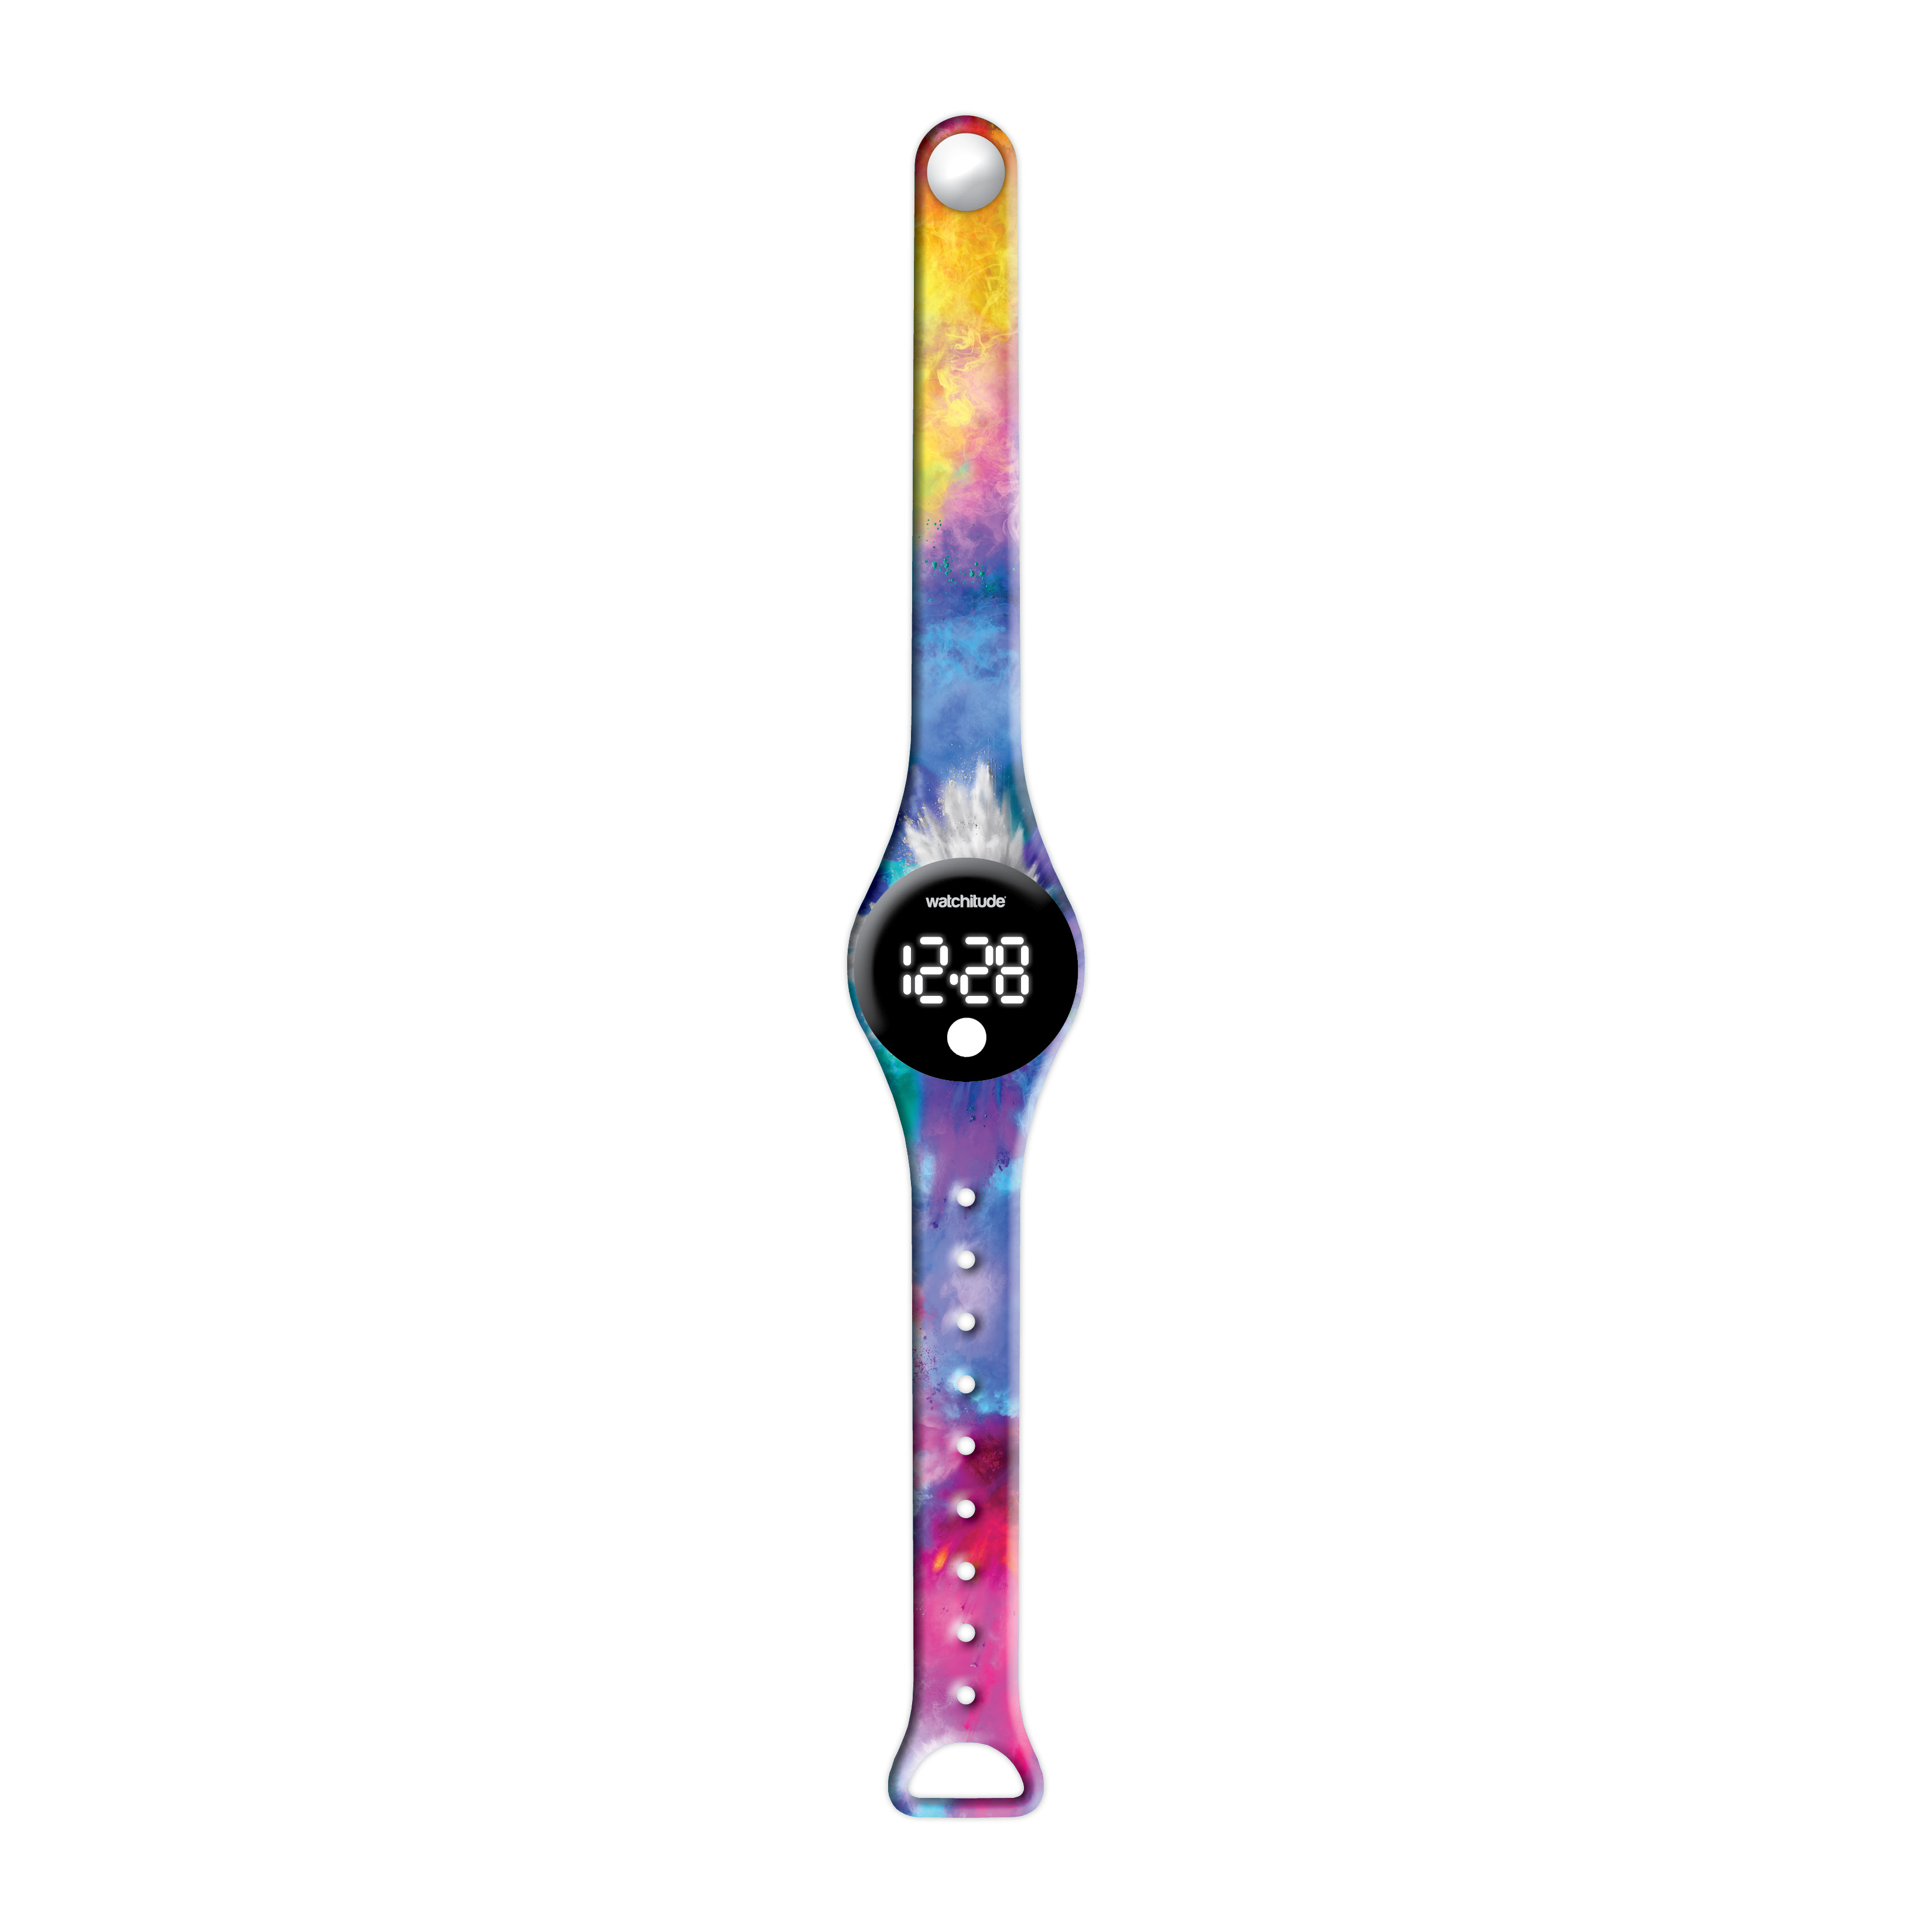 Color Run - Watchitude Blip - Digital Watch